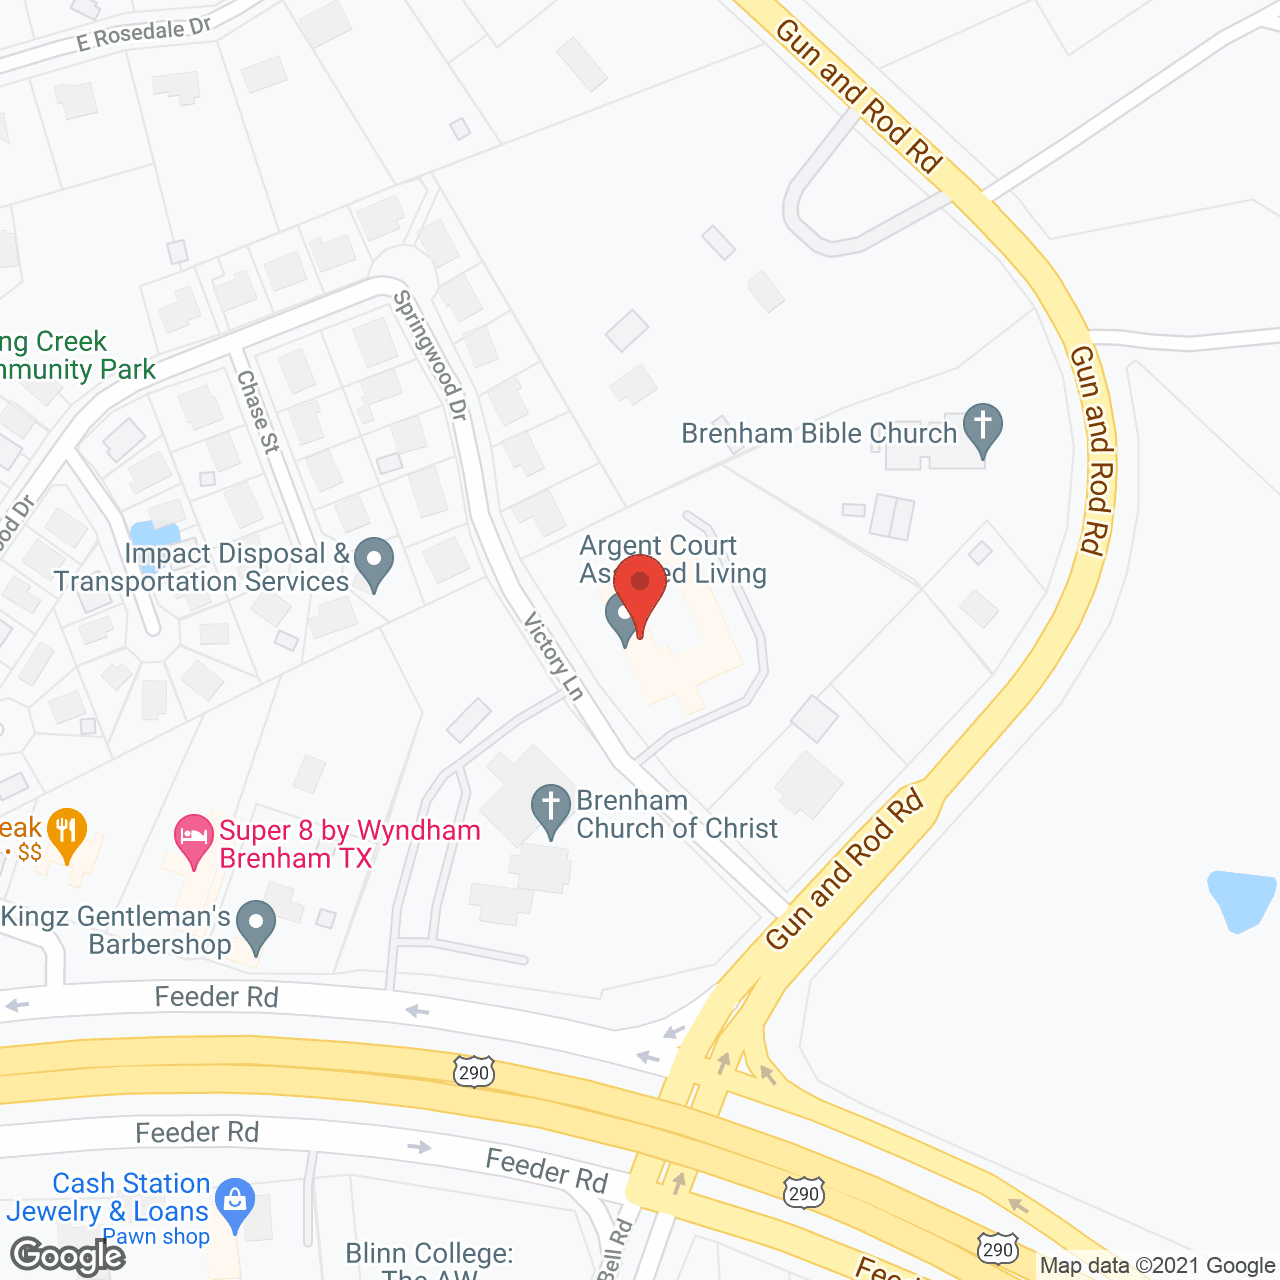 Argent Court Brenham in google map